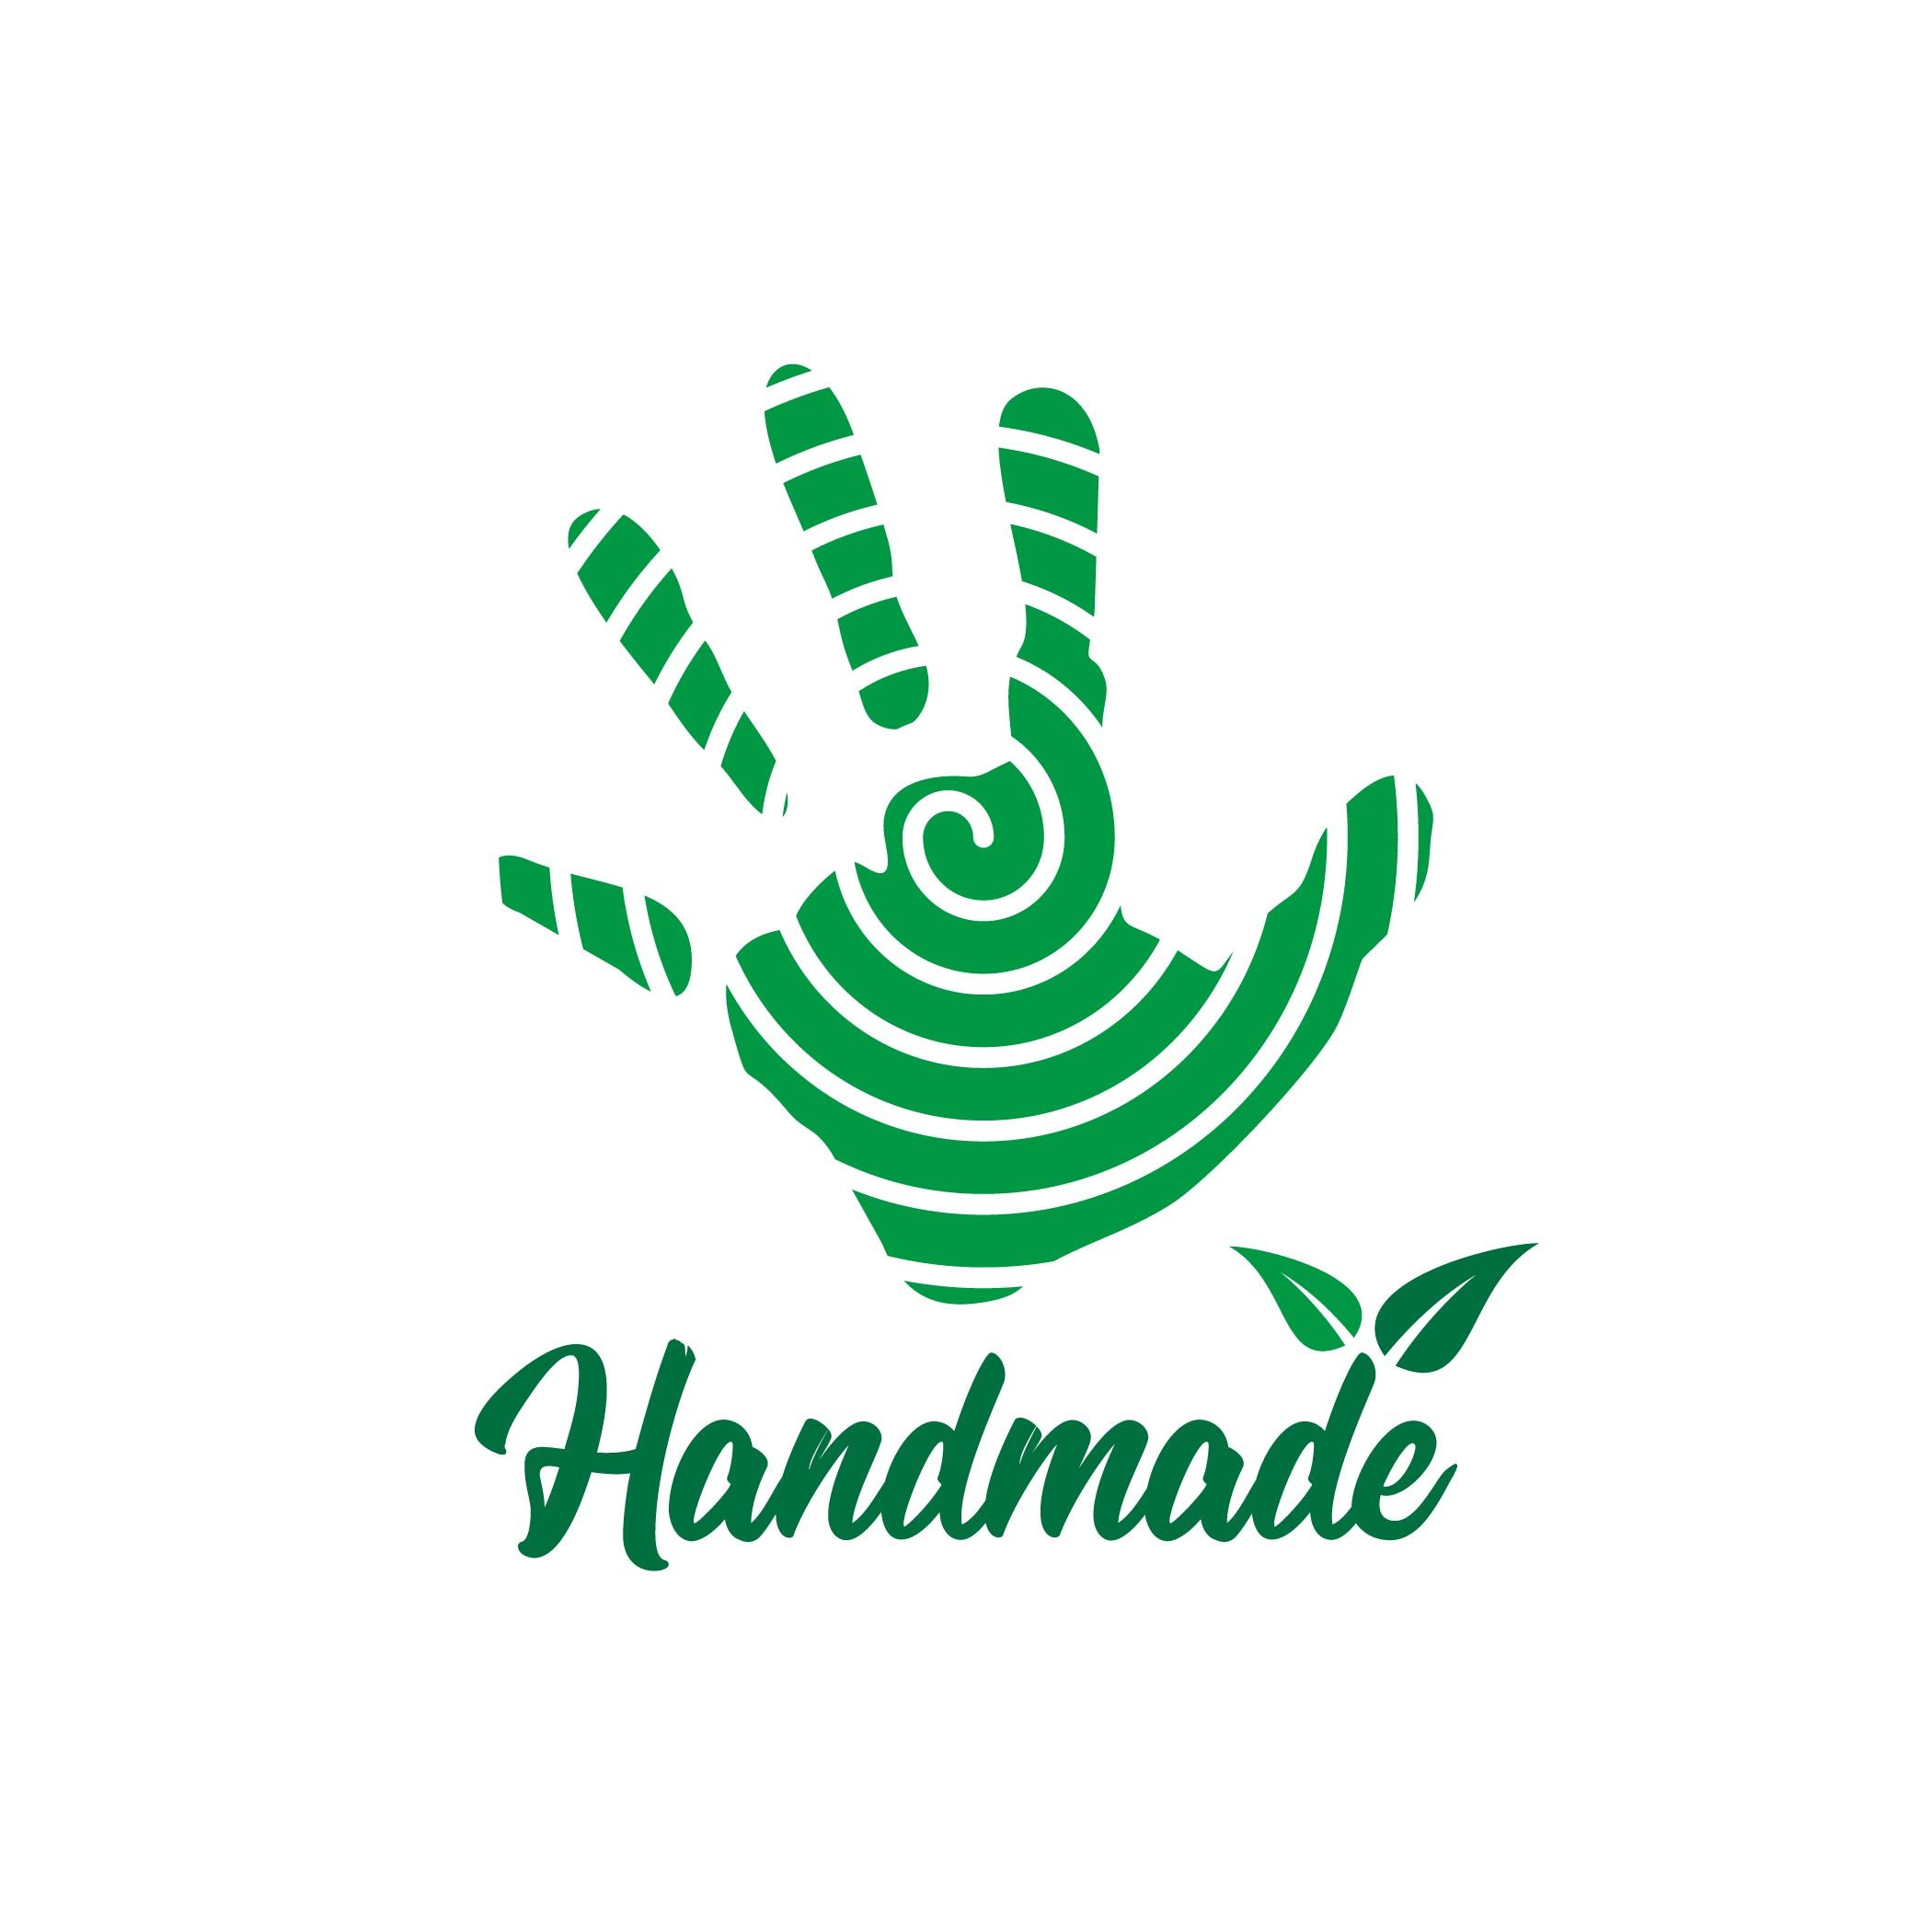 handmade logo ideas 7